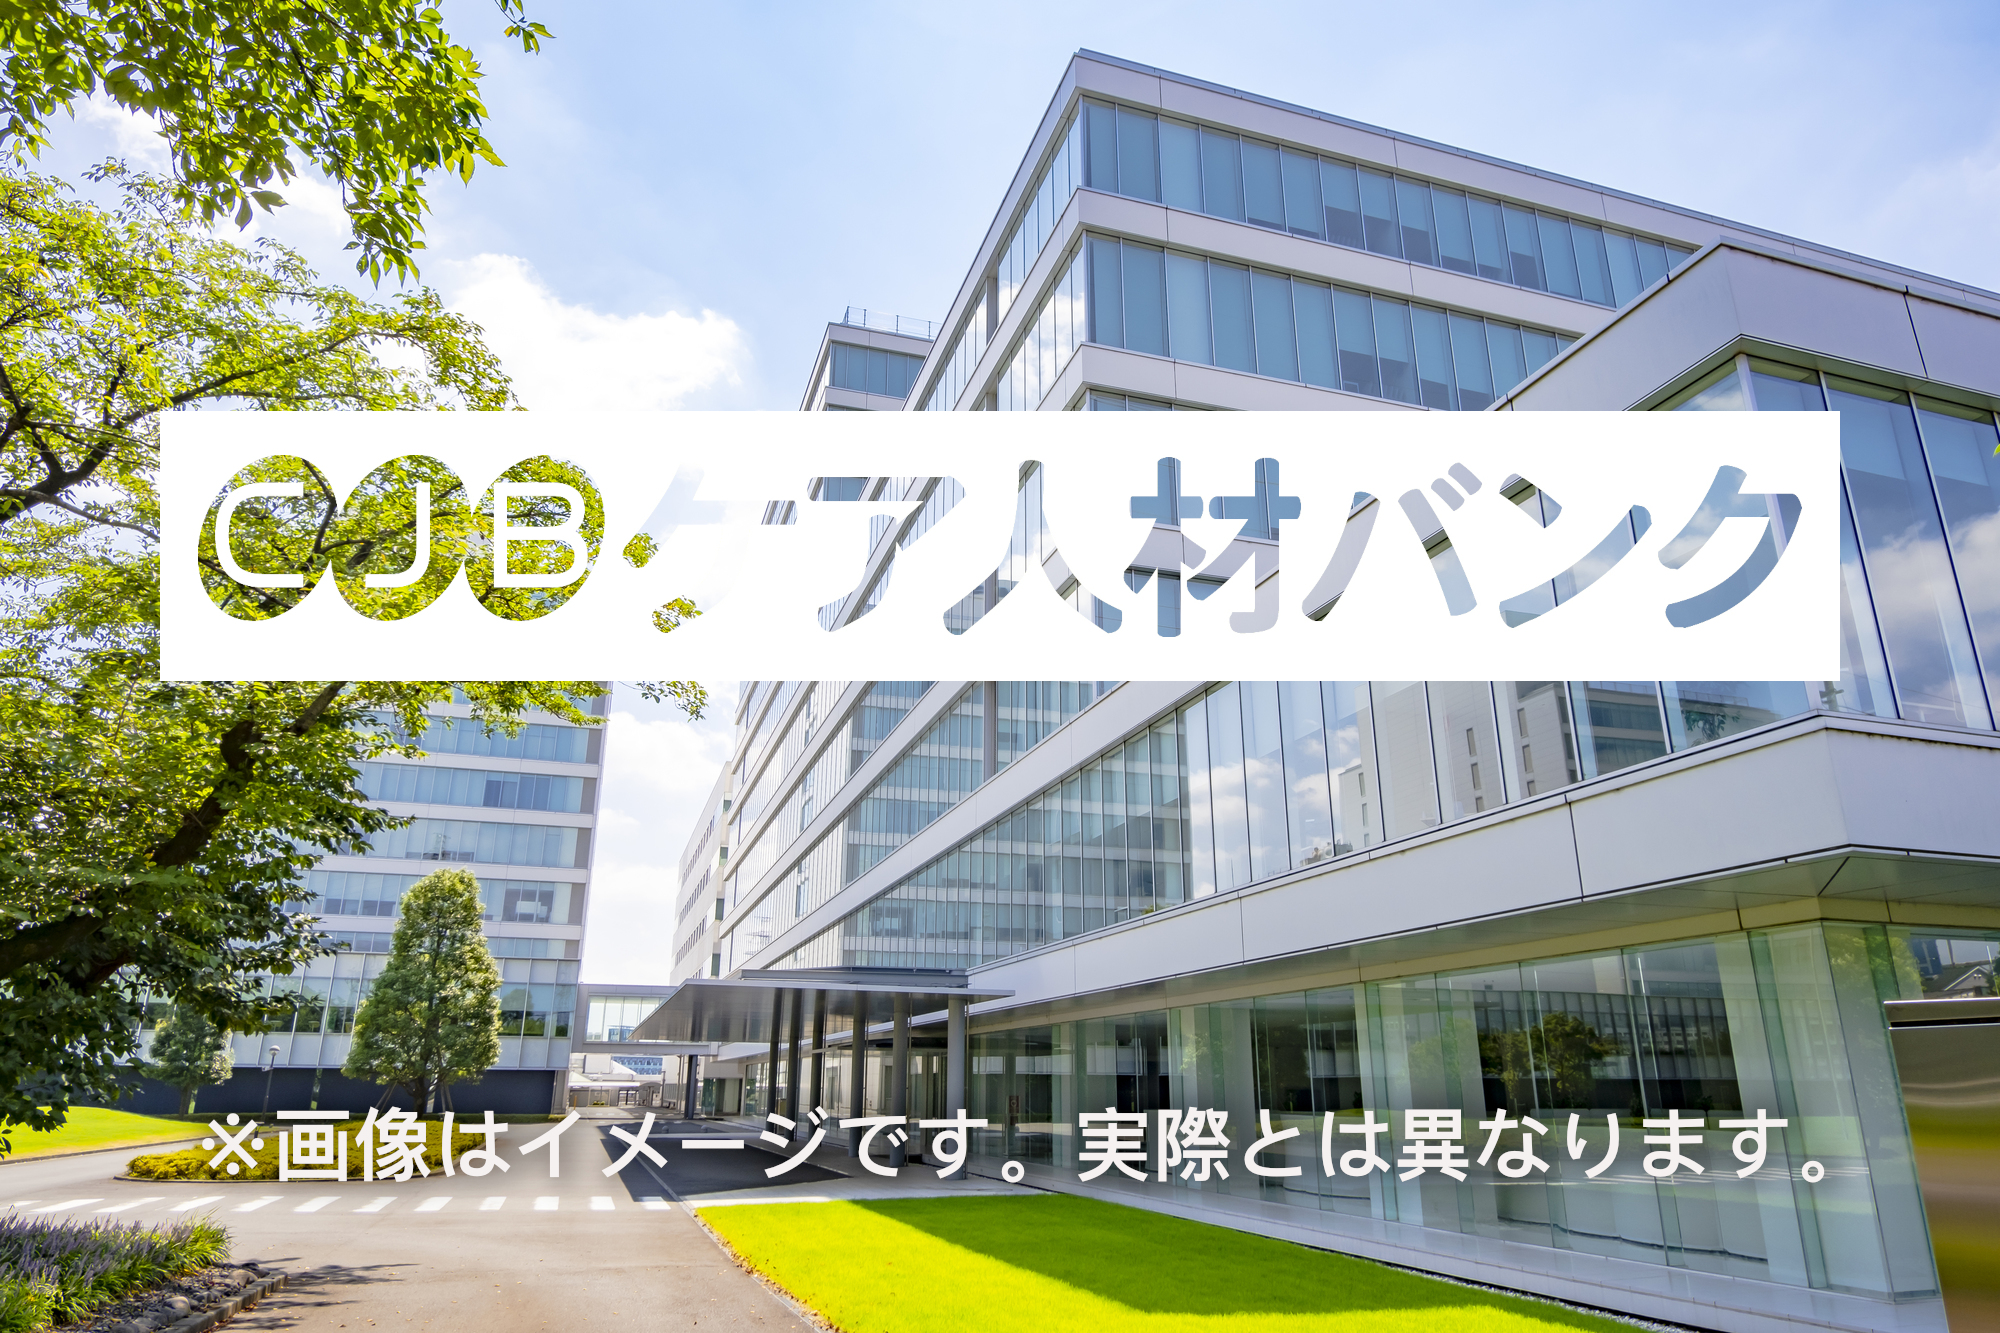 AOI七沢リハビリテーション病院 のイメージ画像